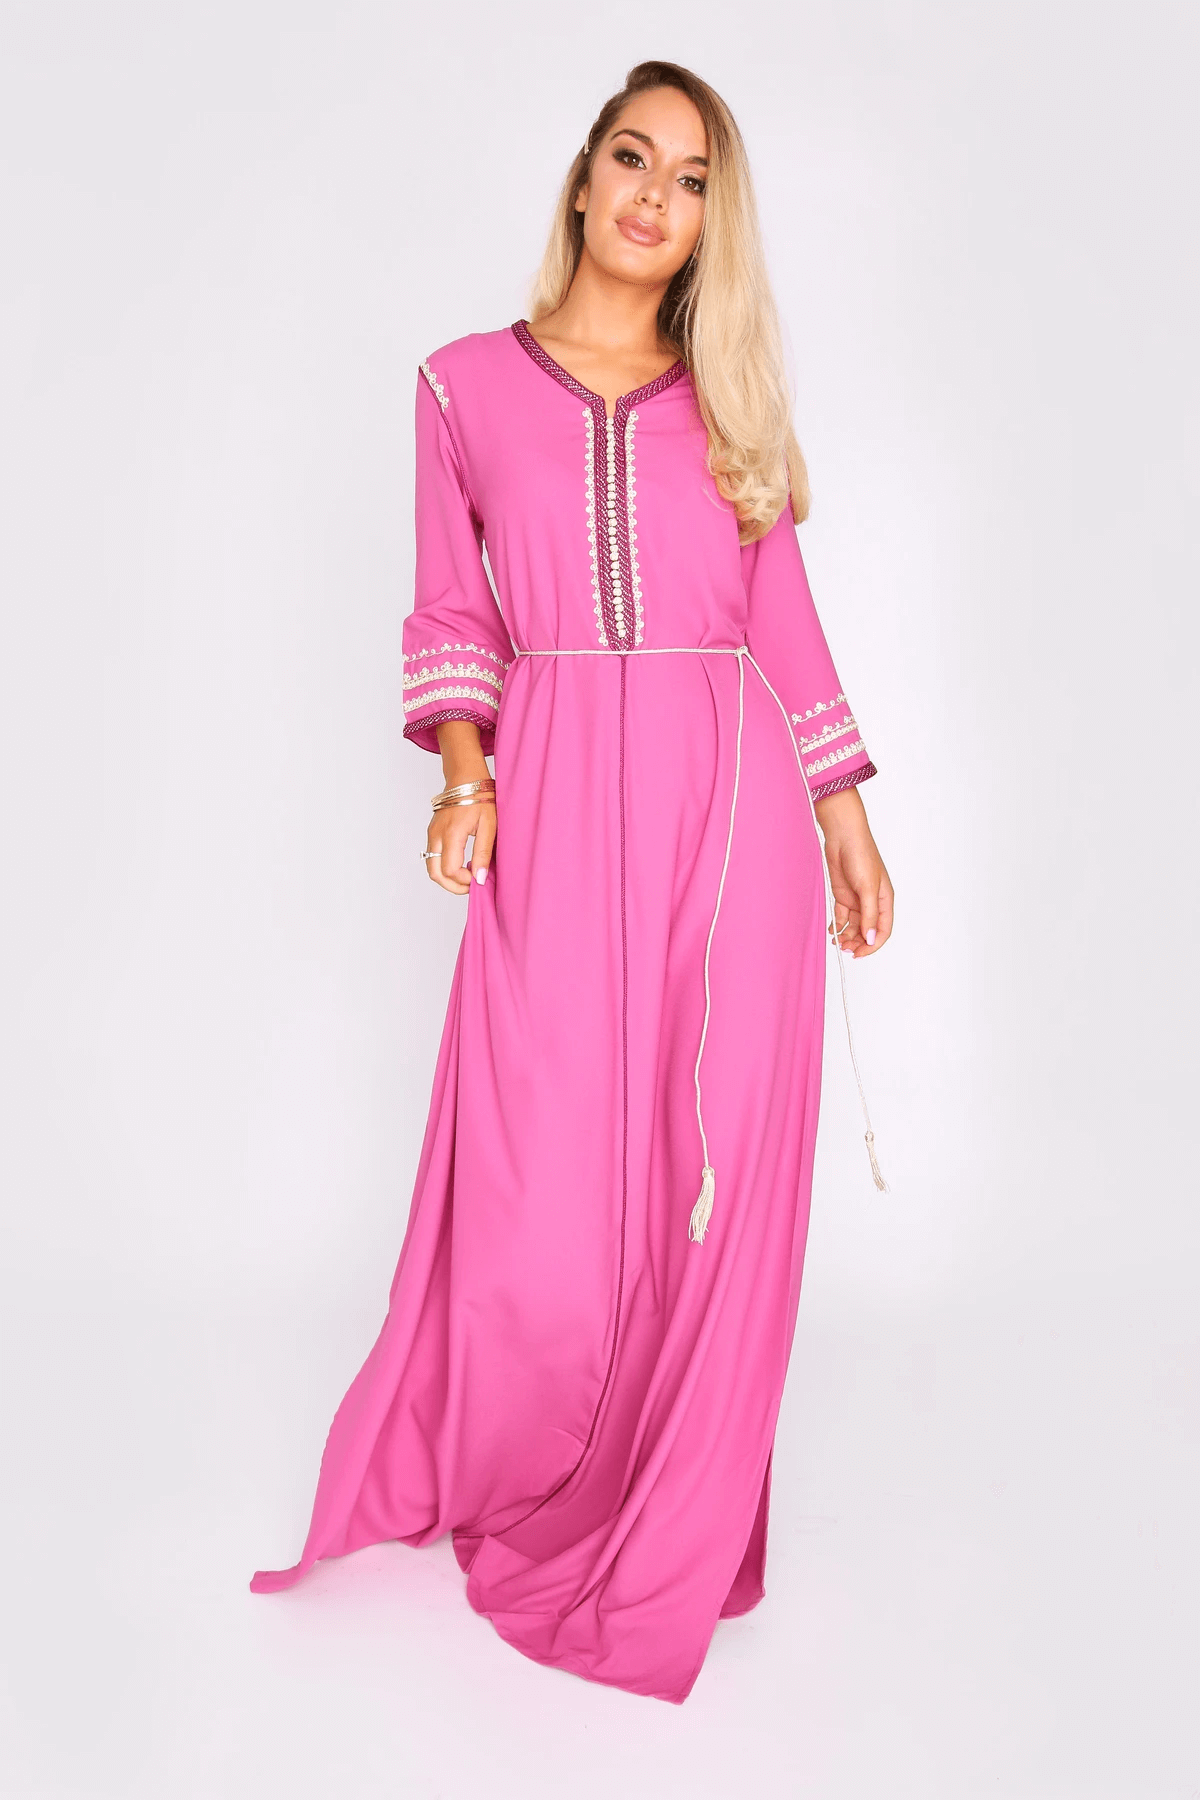 Lebssa Lucrece Occasion Wear Cropped Sleeve Full-Length Evening Dress with Belt inåÊFuschia Pink